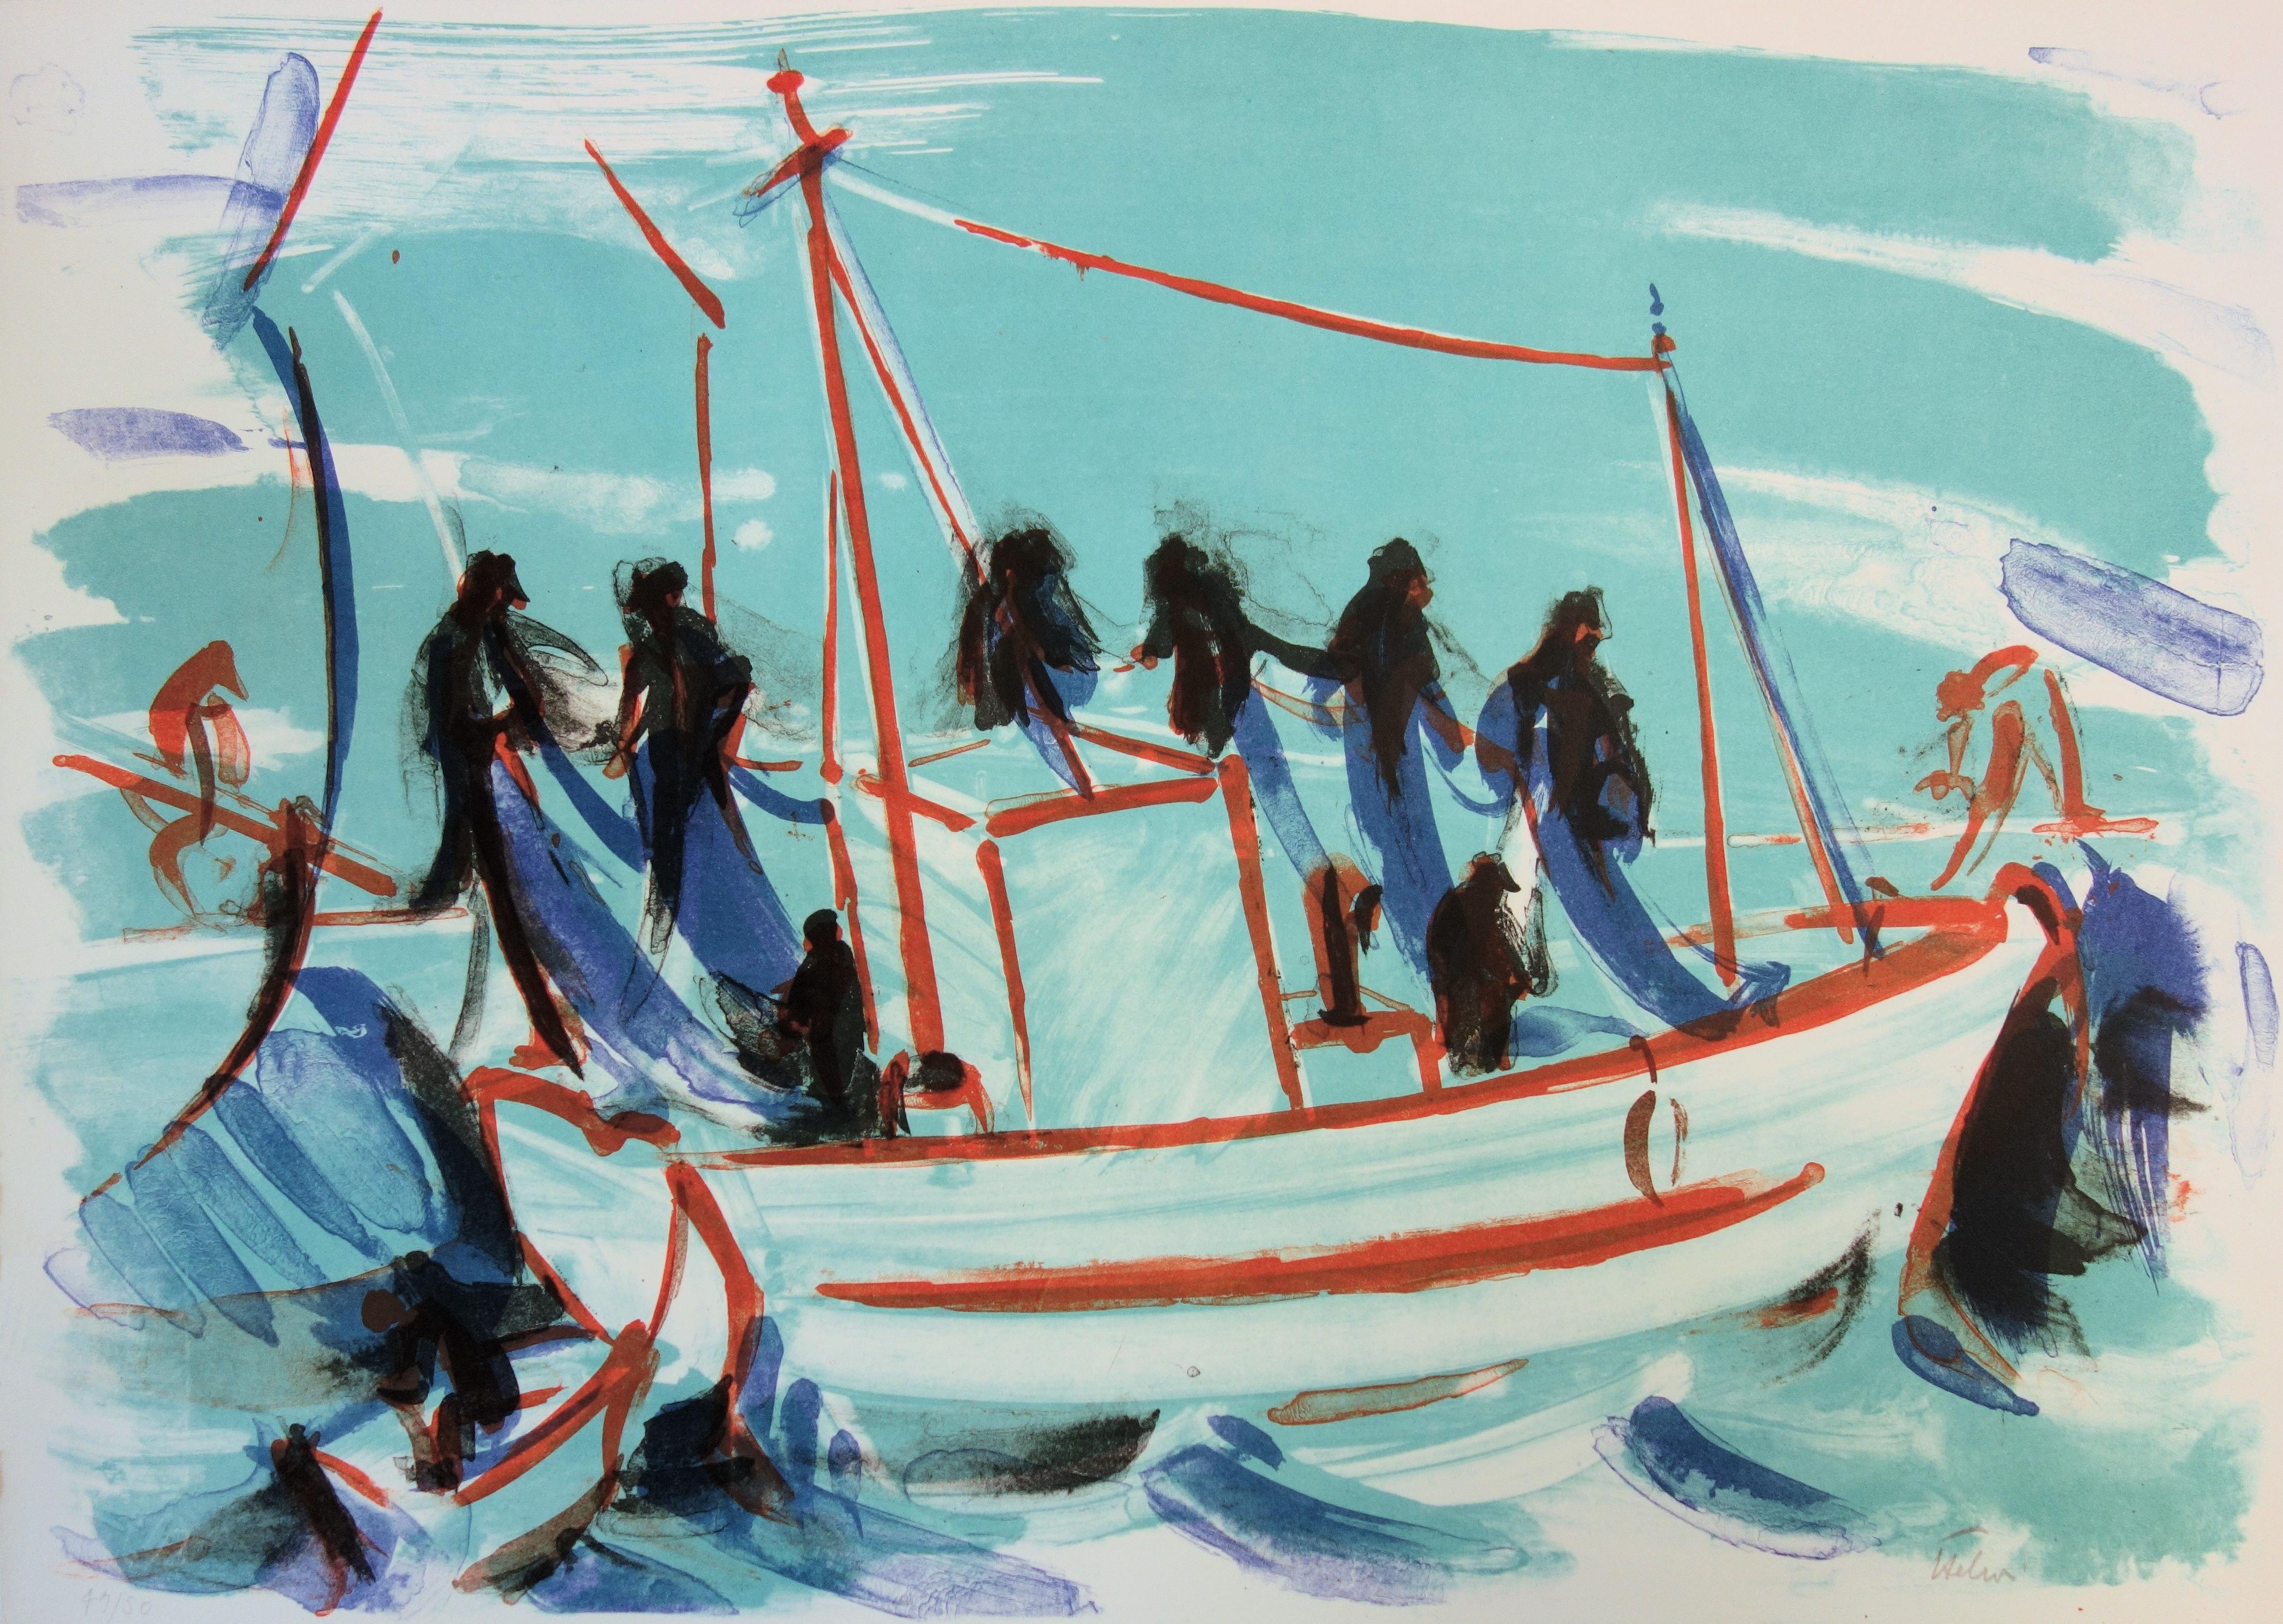 Jean Helion Landscape Print - Fishermen working on a Boat - Original handsigned lithograph - 50 copies